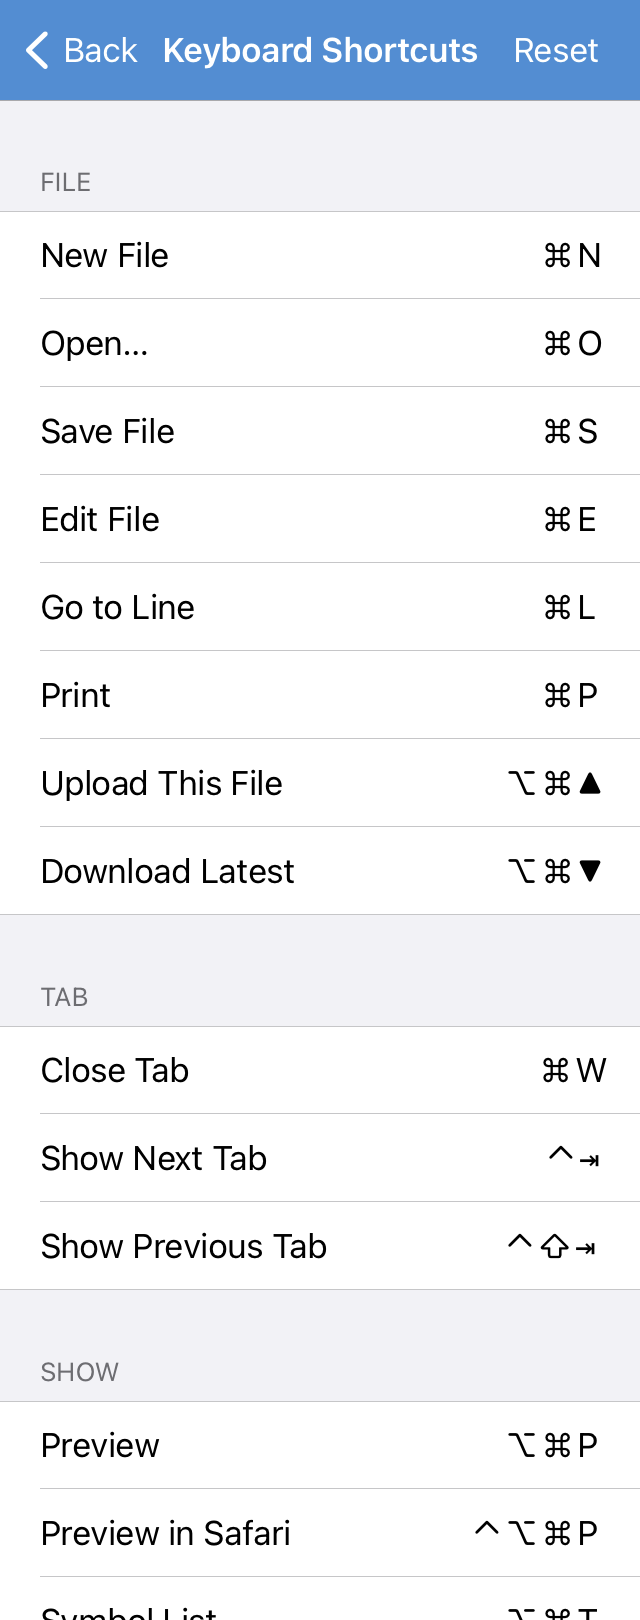 Keyboard shortcut settings